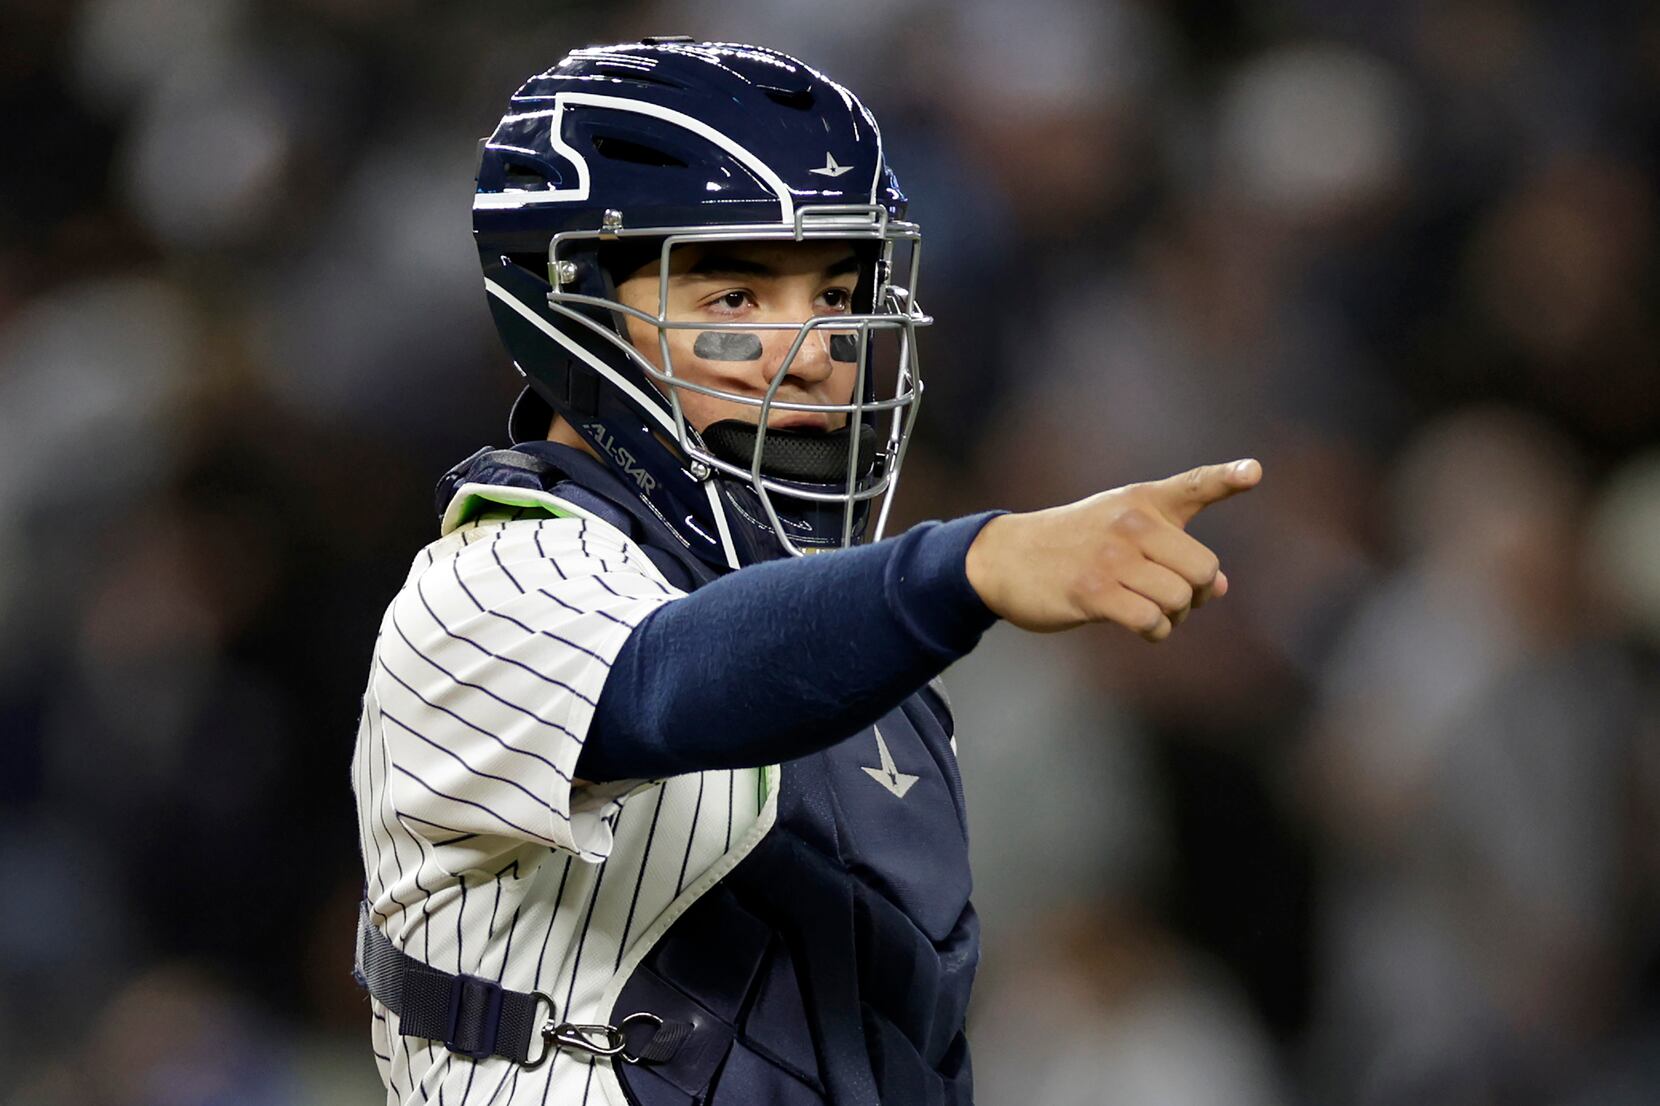 Yankees catcher Jose Trevino to undergo season-ending wrist